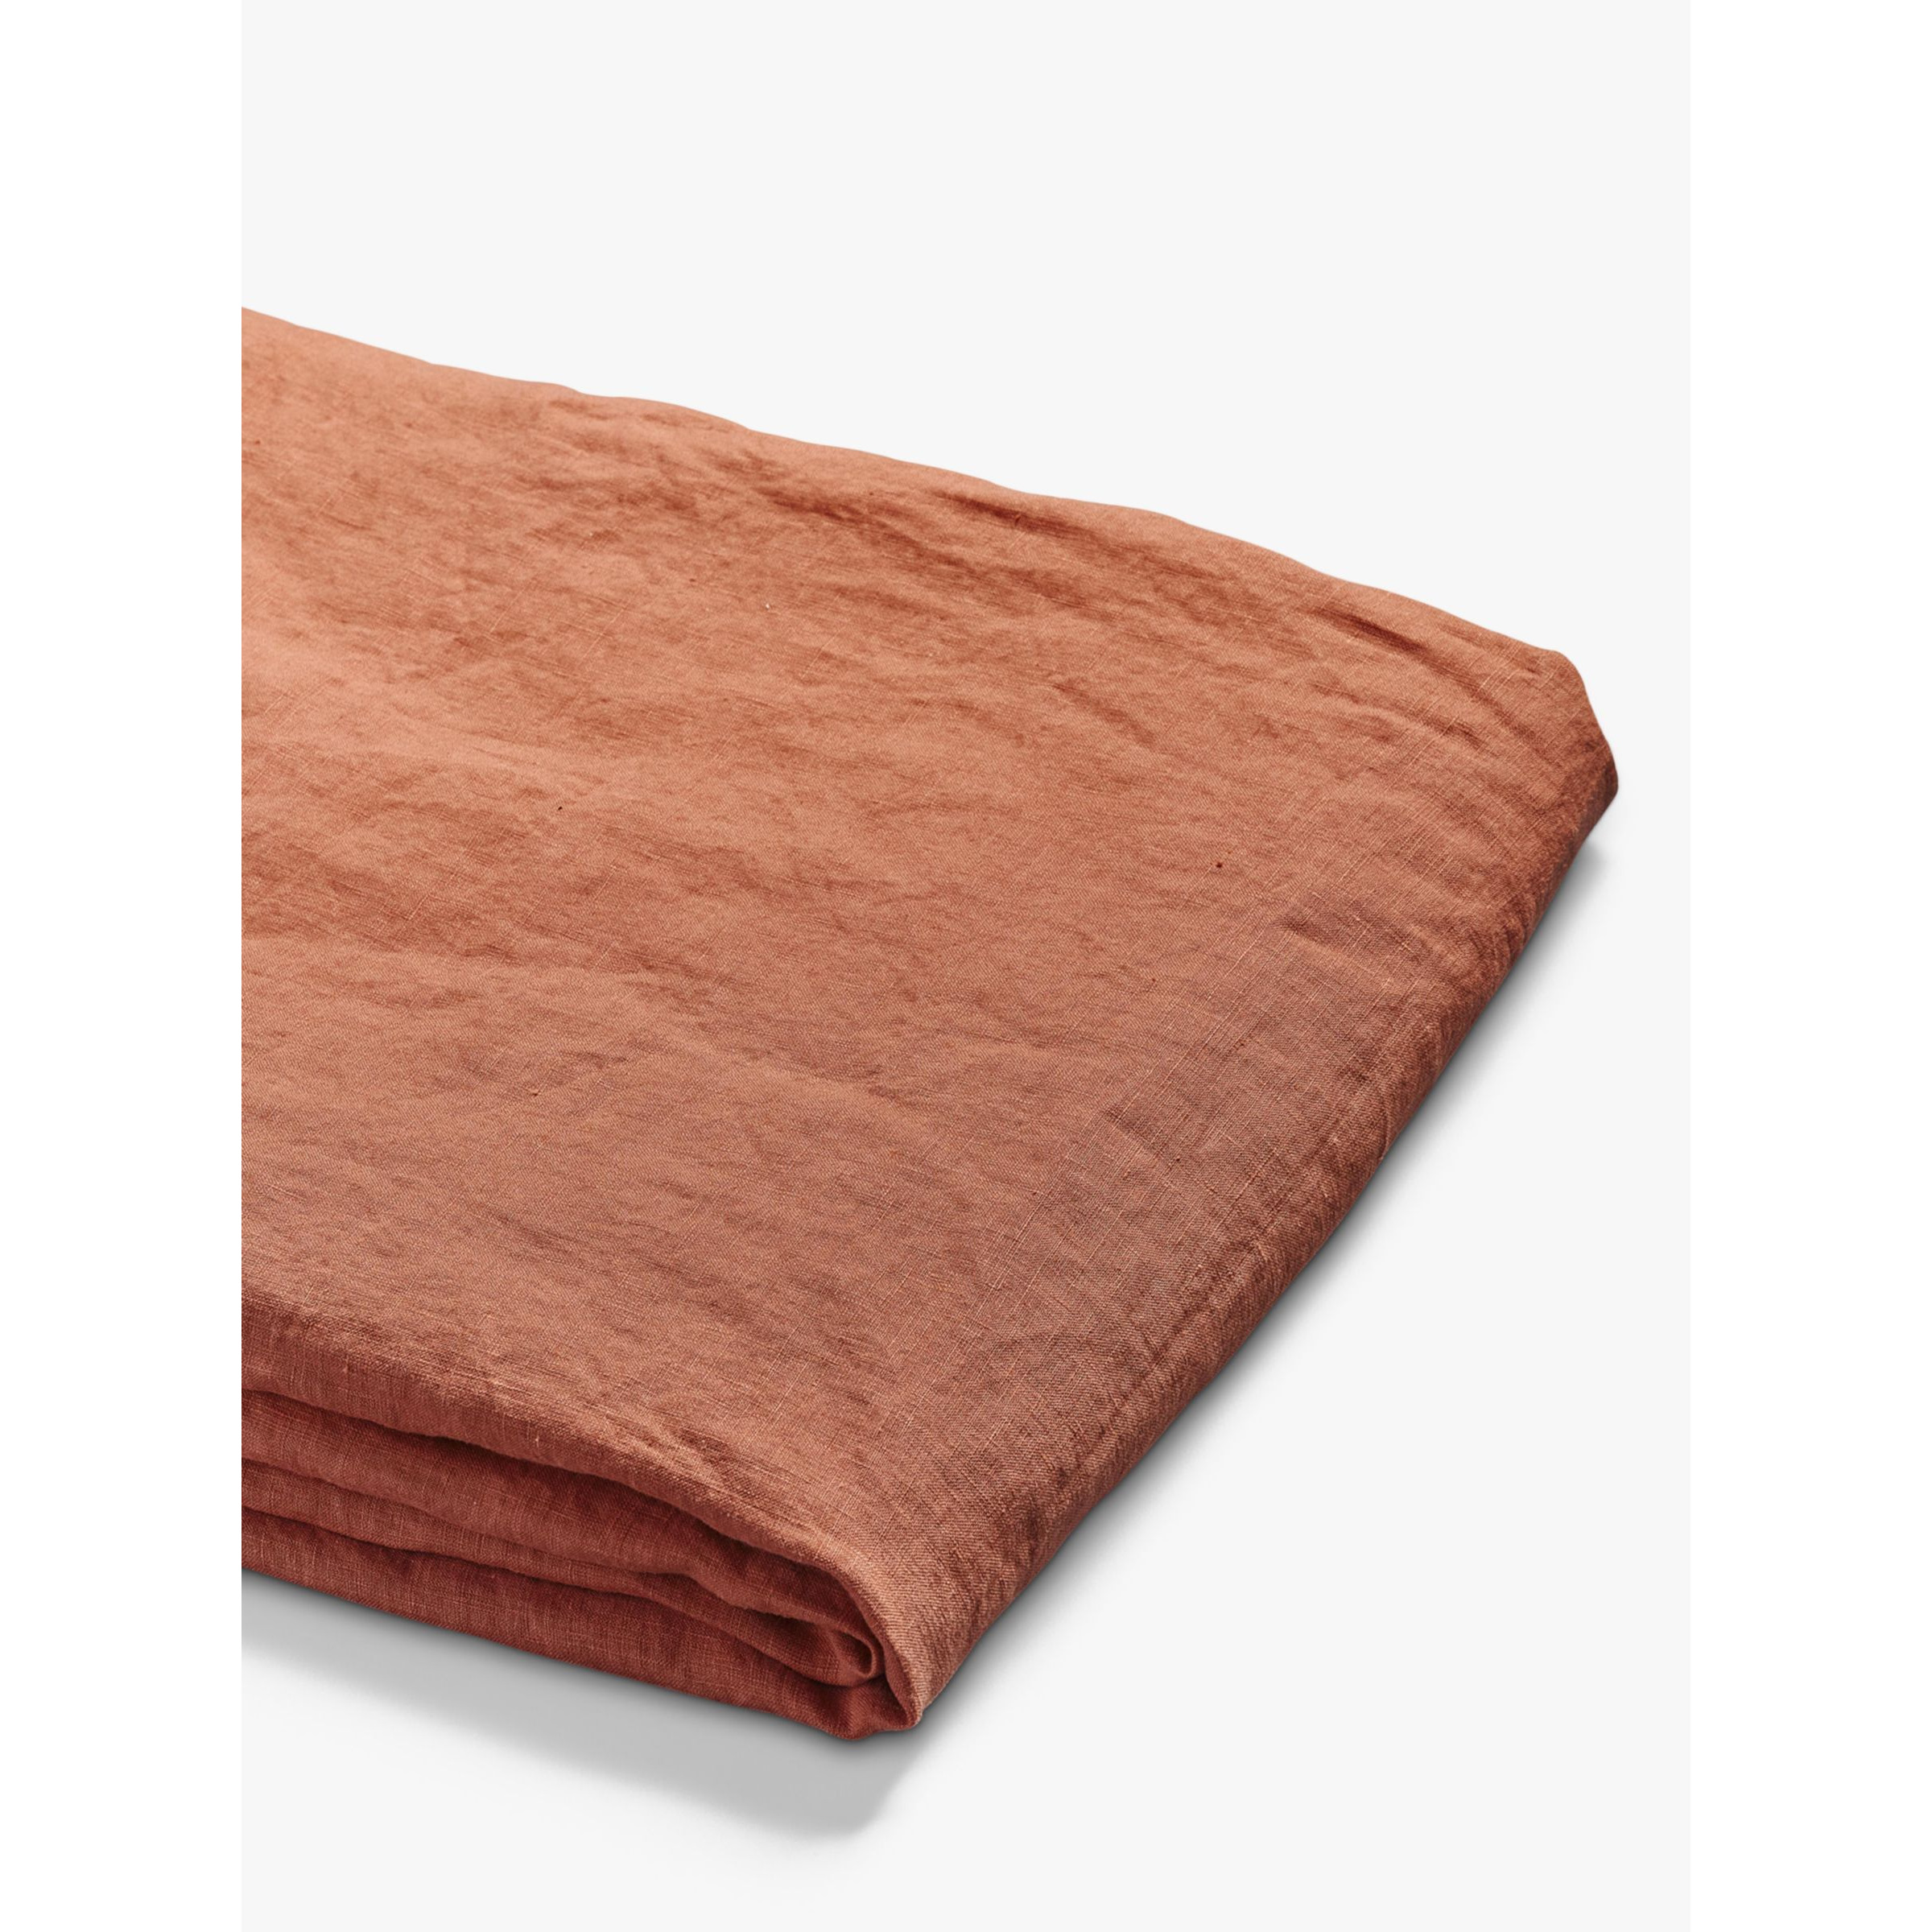 Piglet in Bed Linen Flat Sheet - image 1